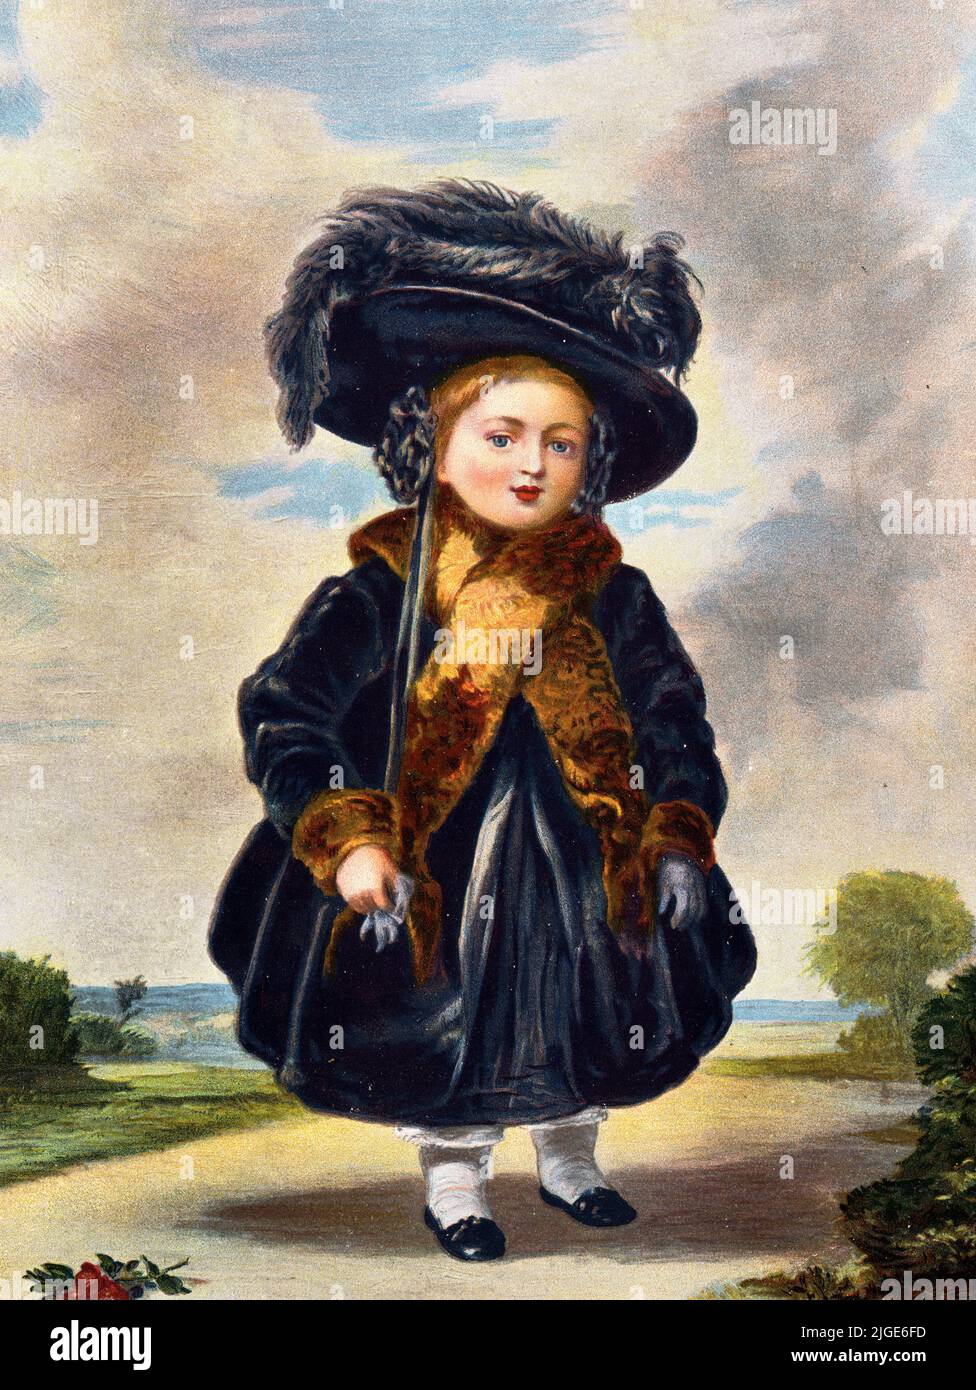 Königin Victoria als Kind Prinzessin 19. Jahrhundert Illustration Stockfoto